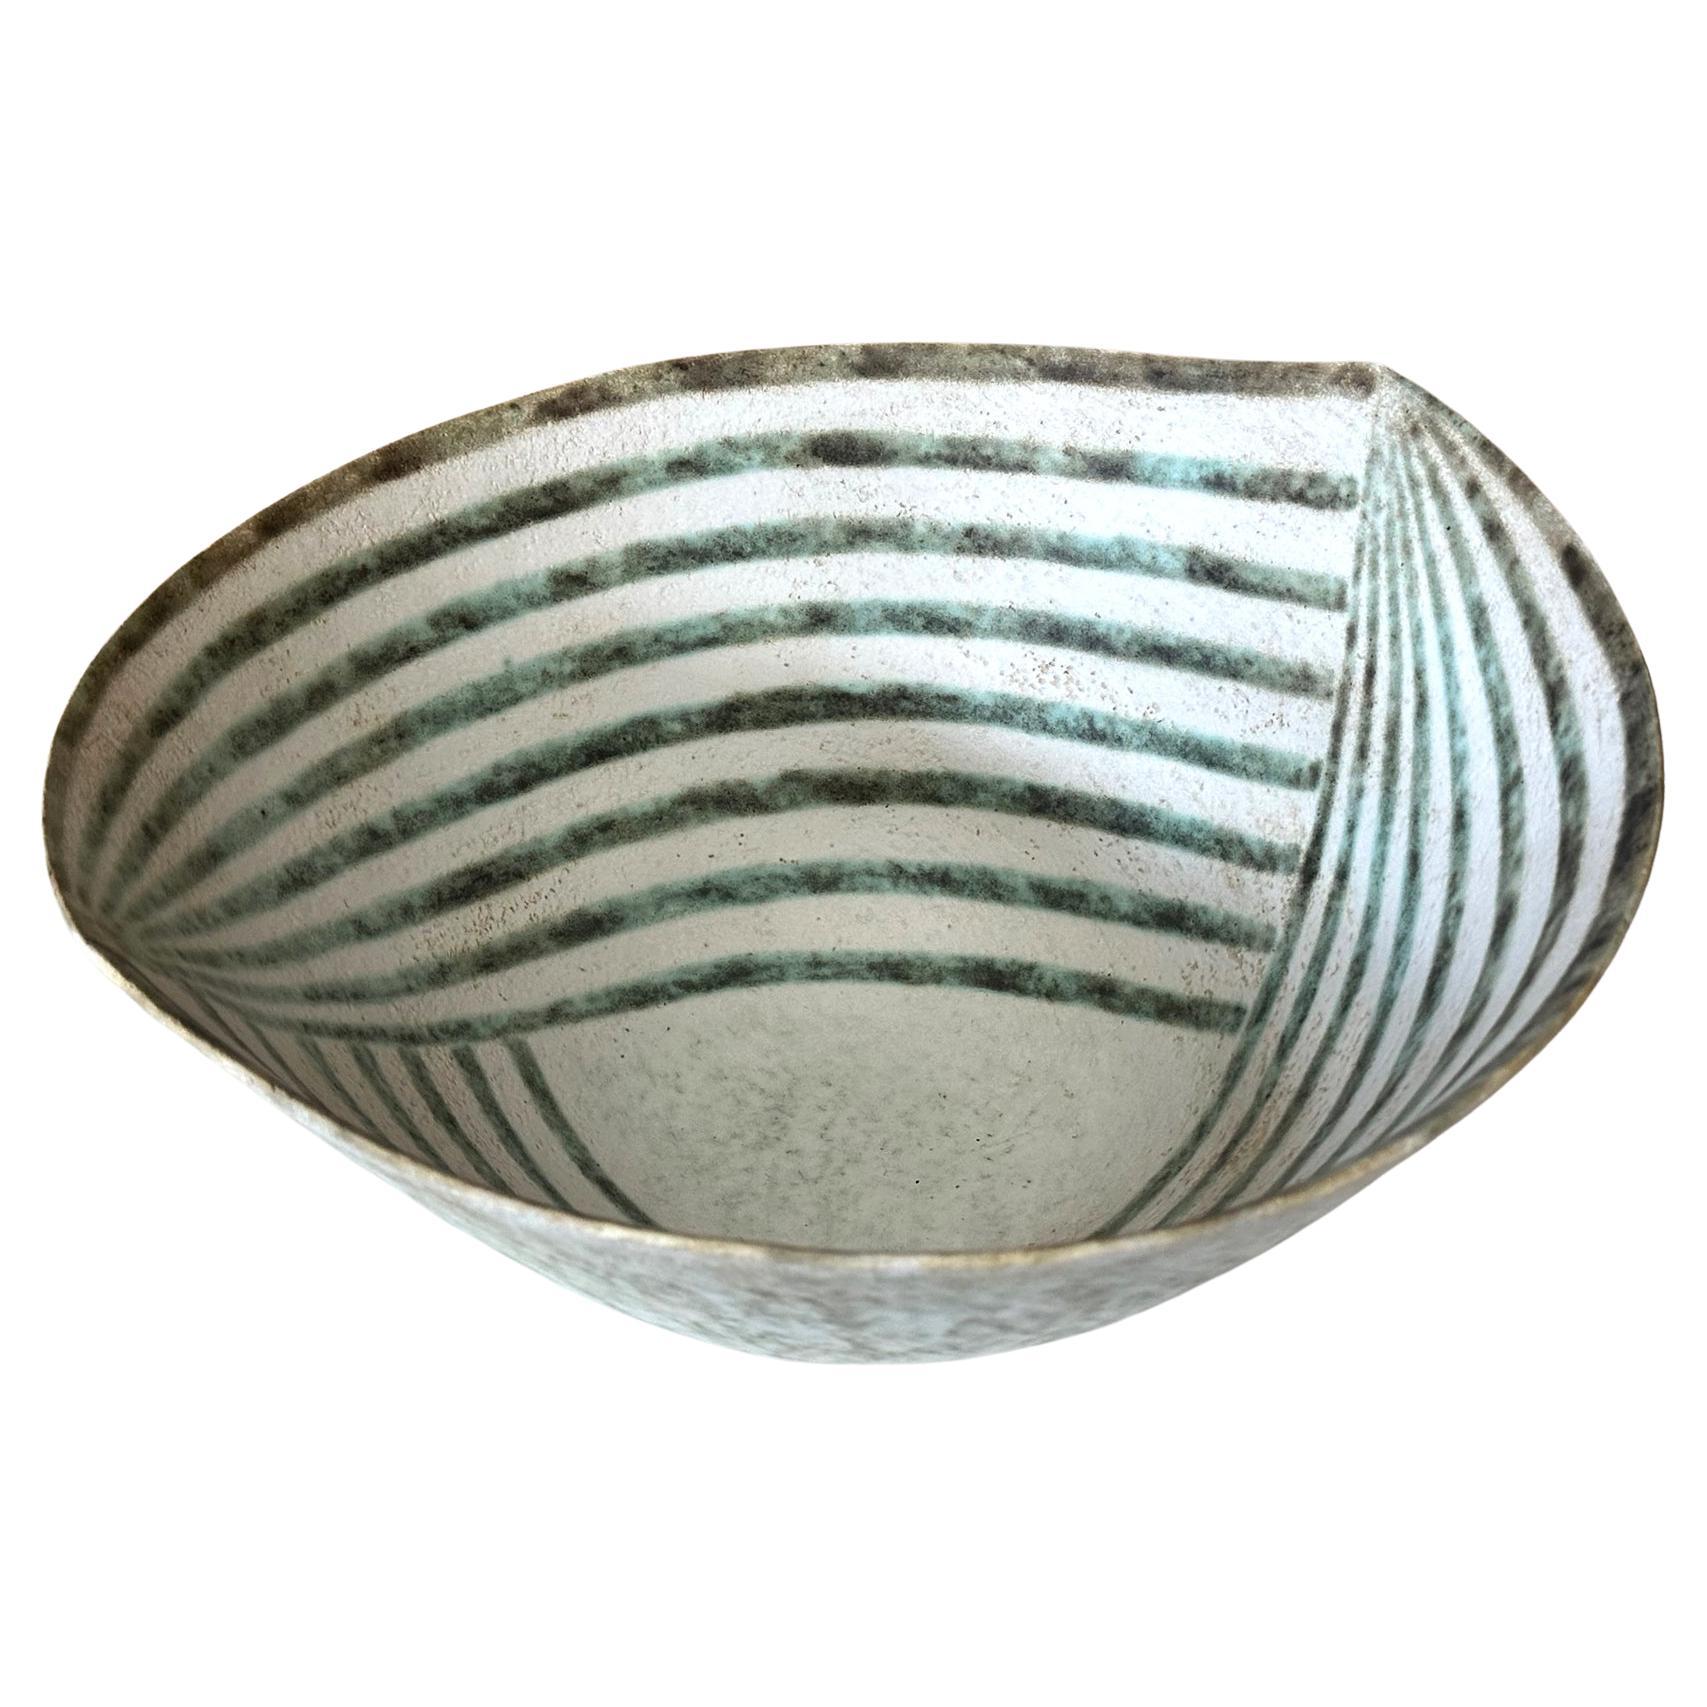 Large Ceramic Leaf Bowl with Banded Glaze by John Ward For Sale